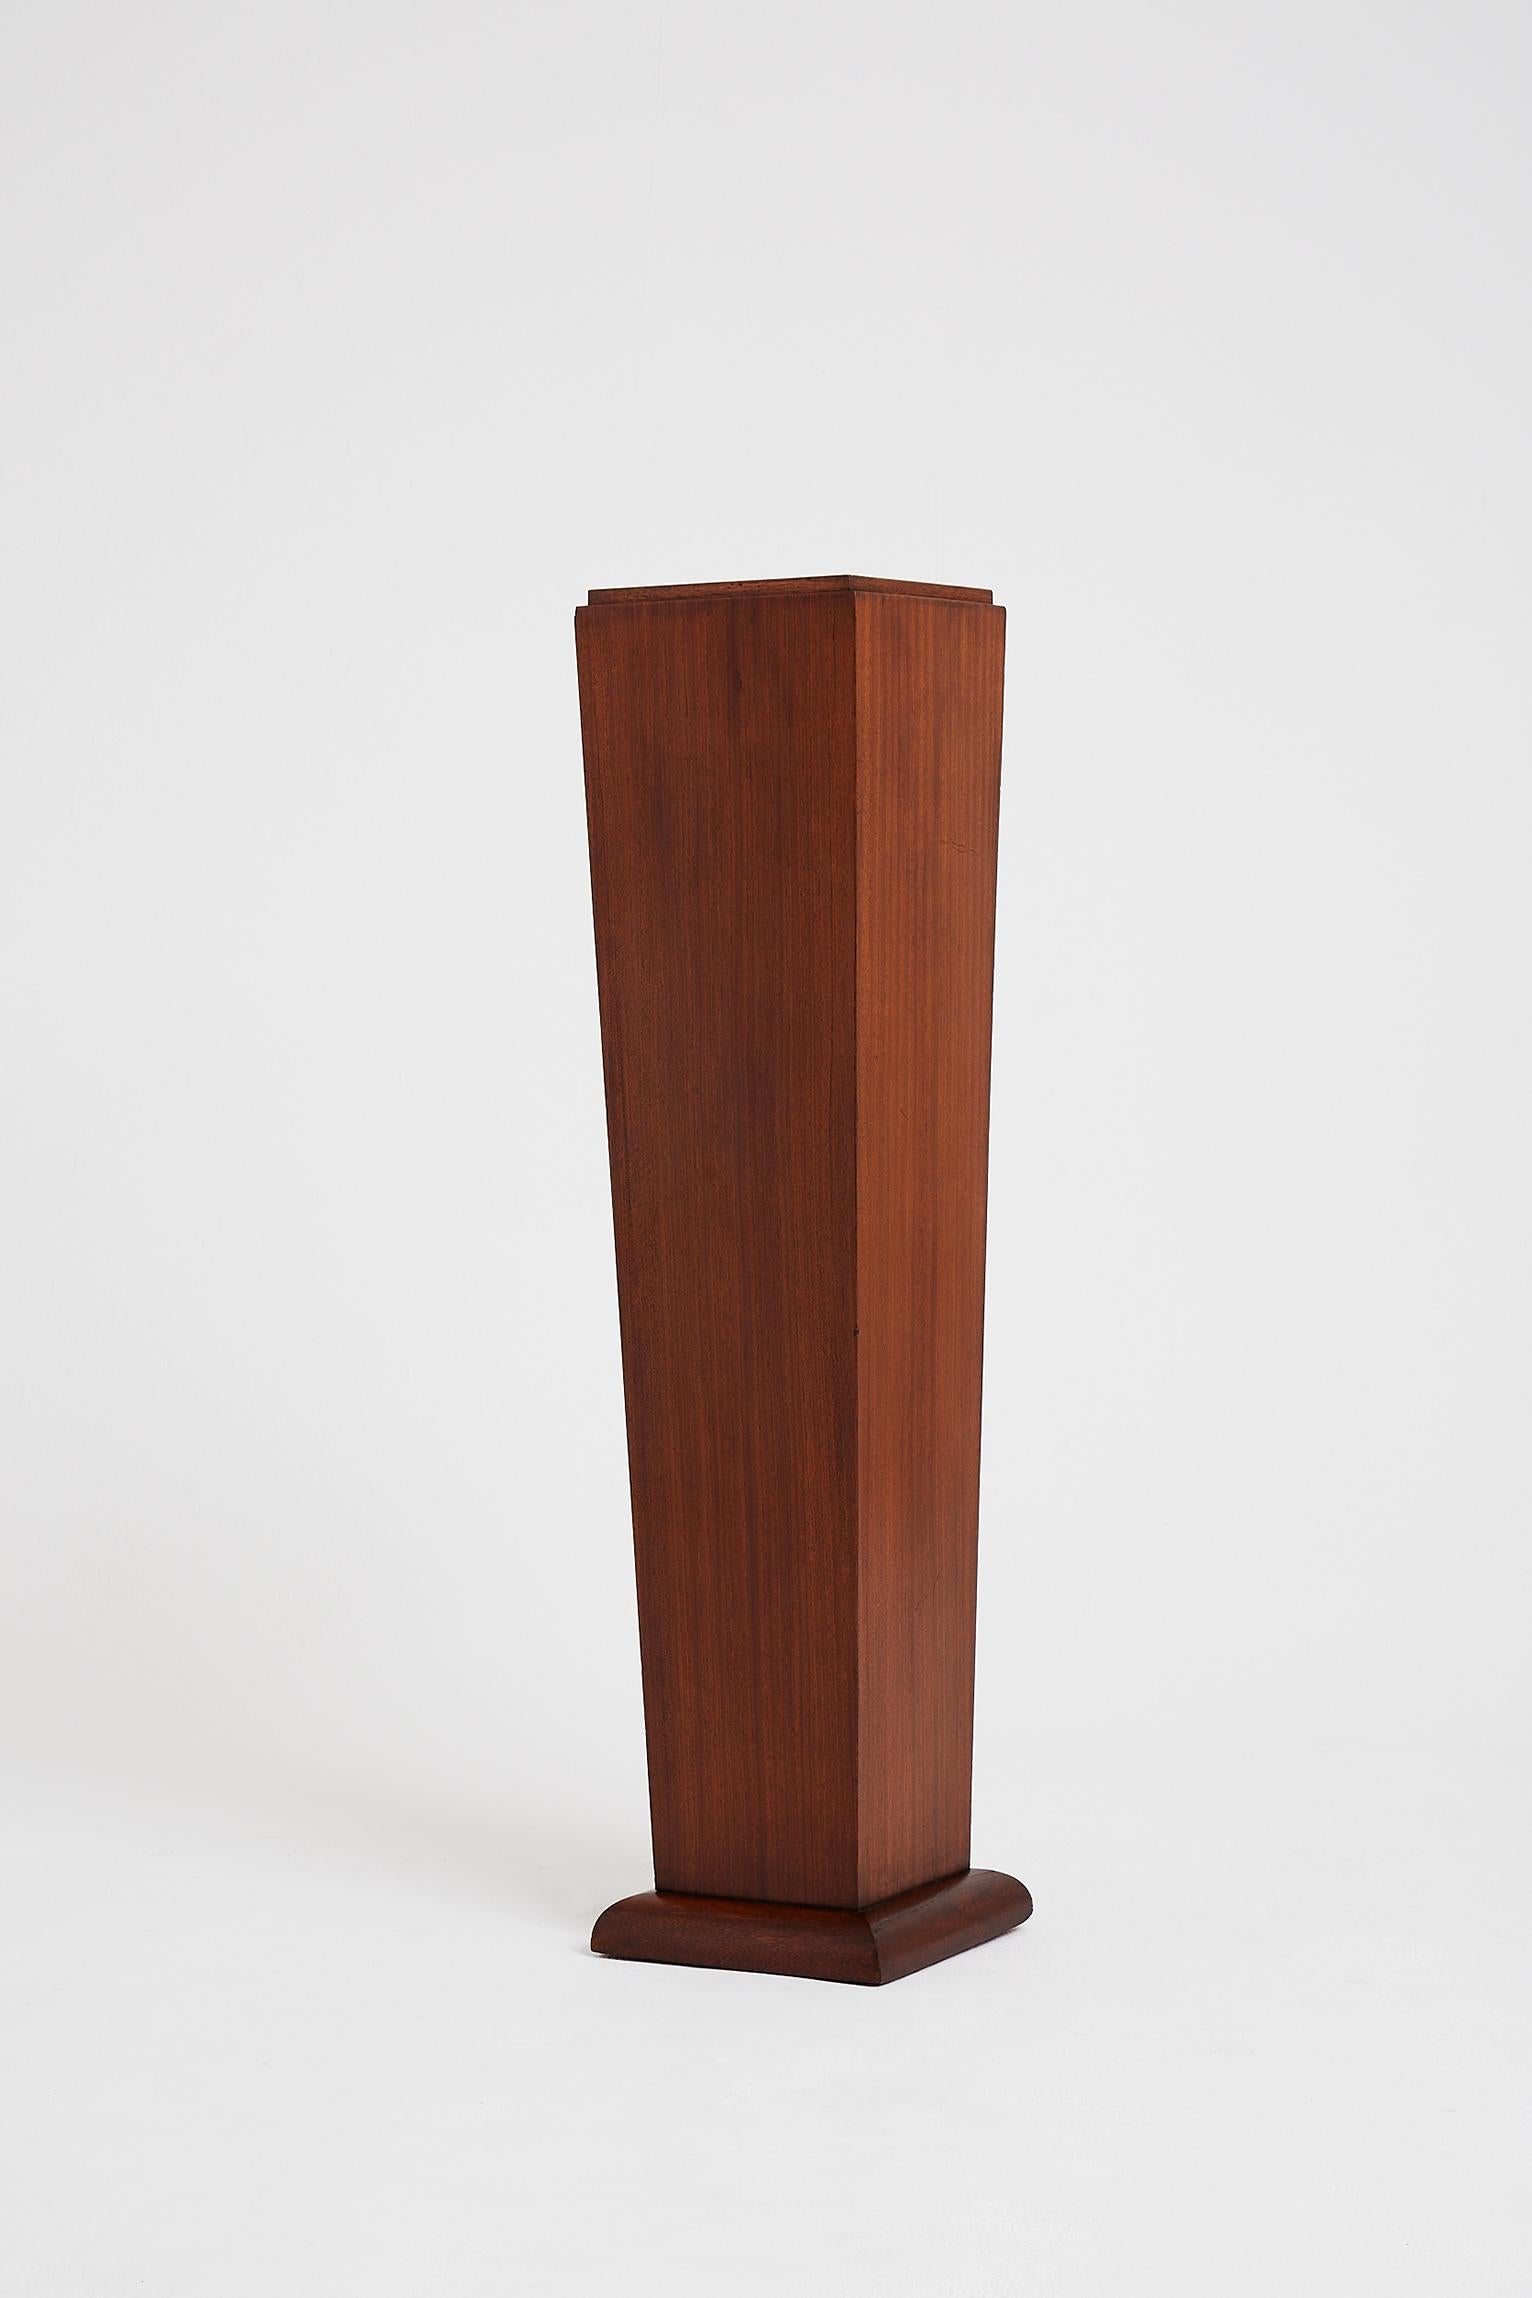 French Art Deco Mahogany Pedestal